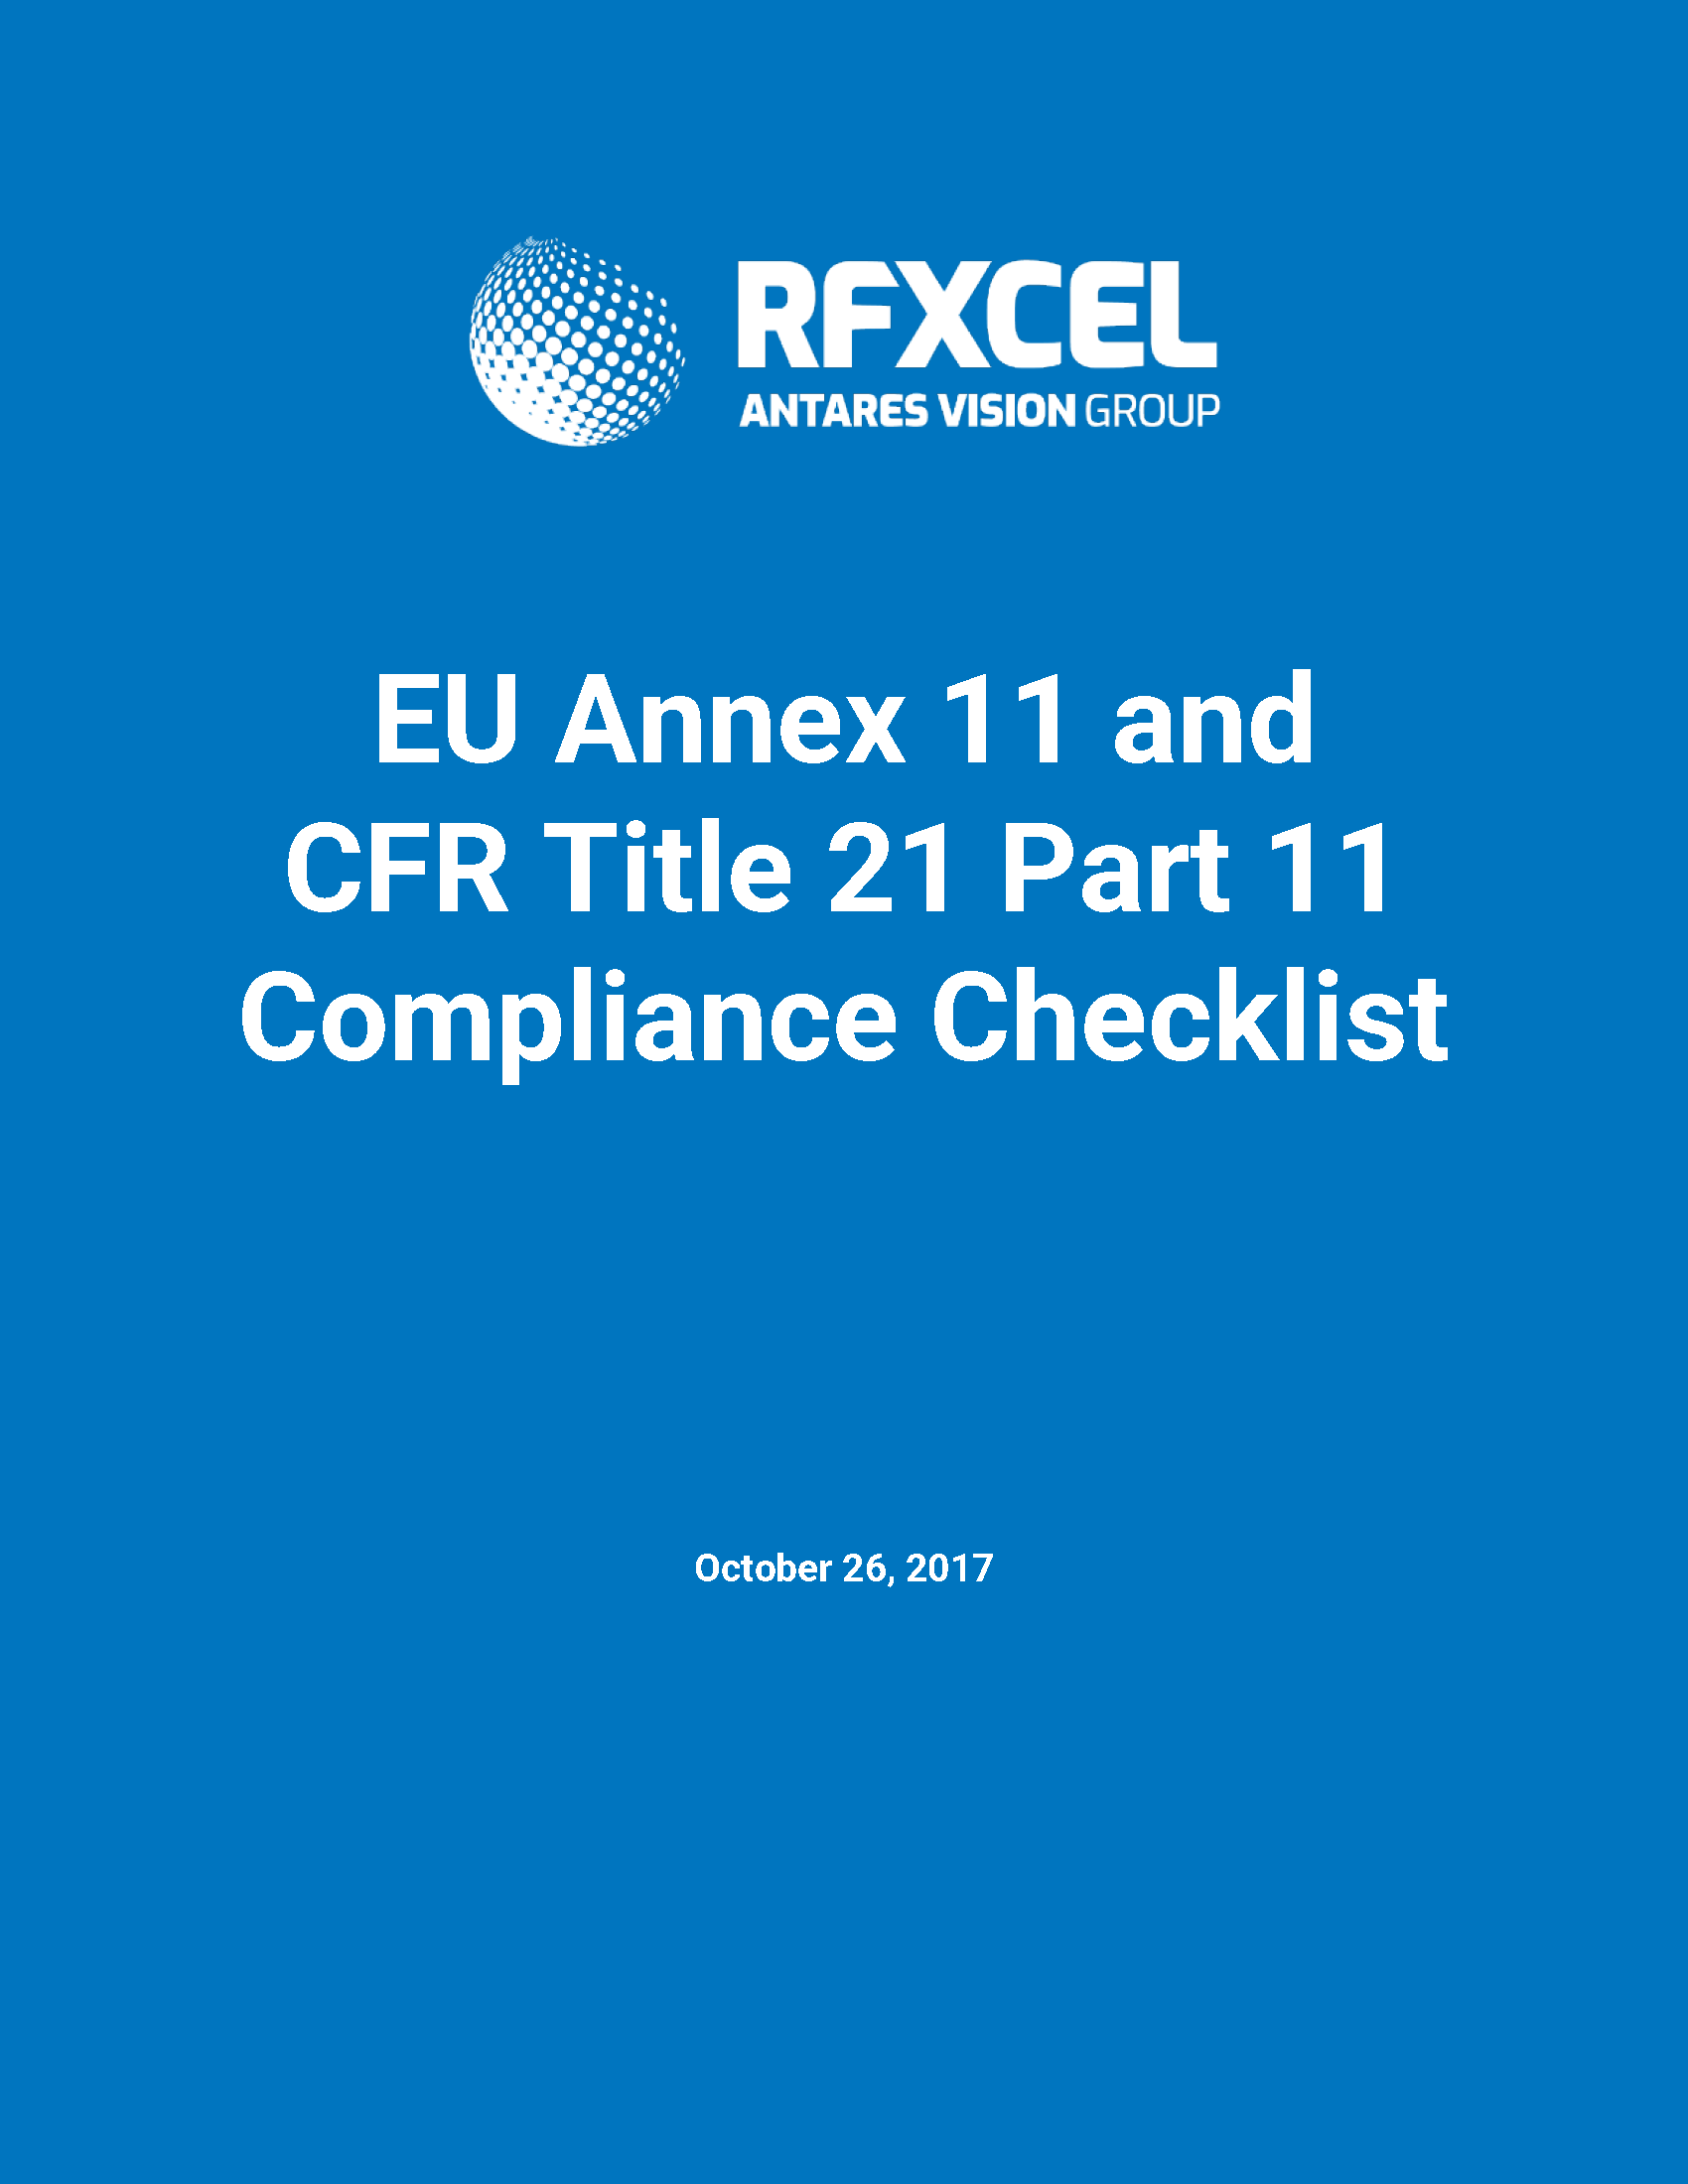 Compliance Checklist – CFR Title 21 Part 11 and EU Annex 11